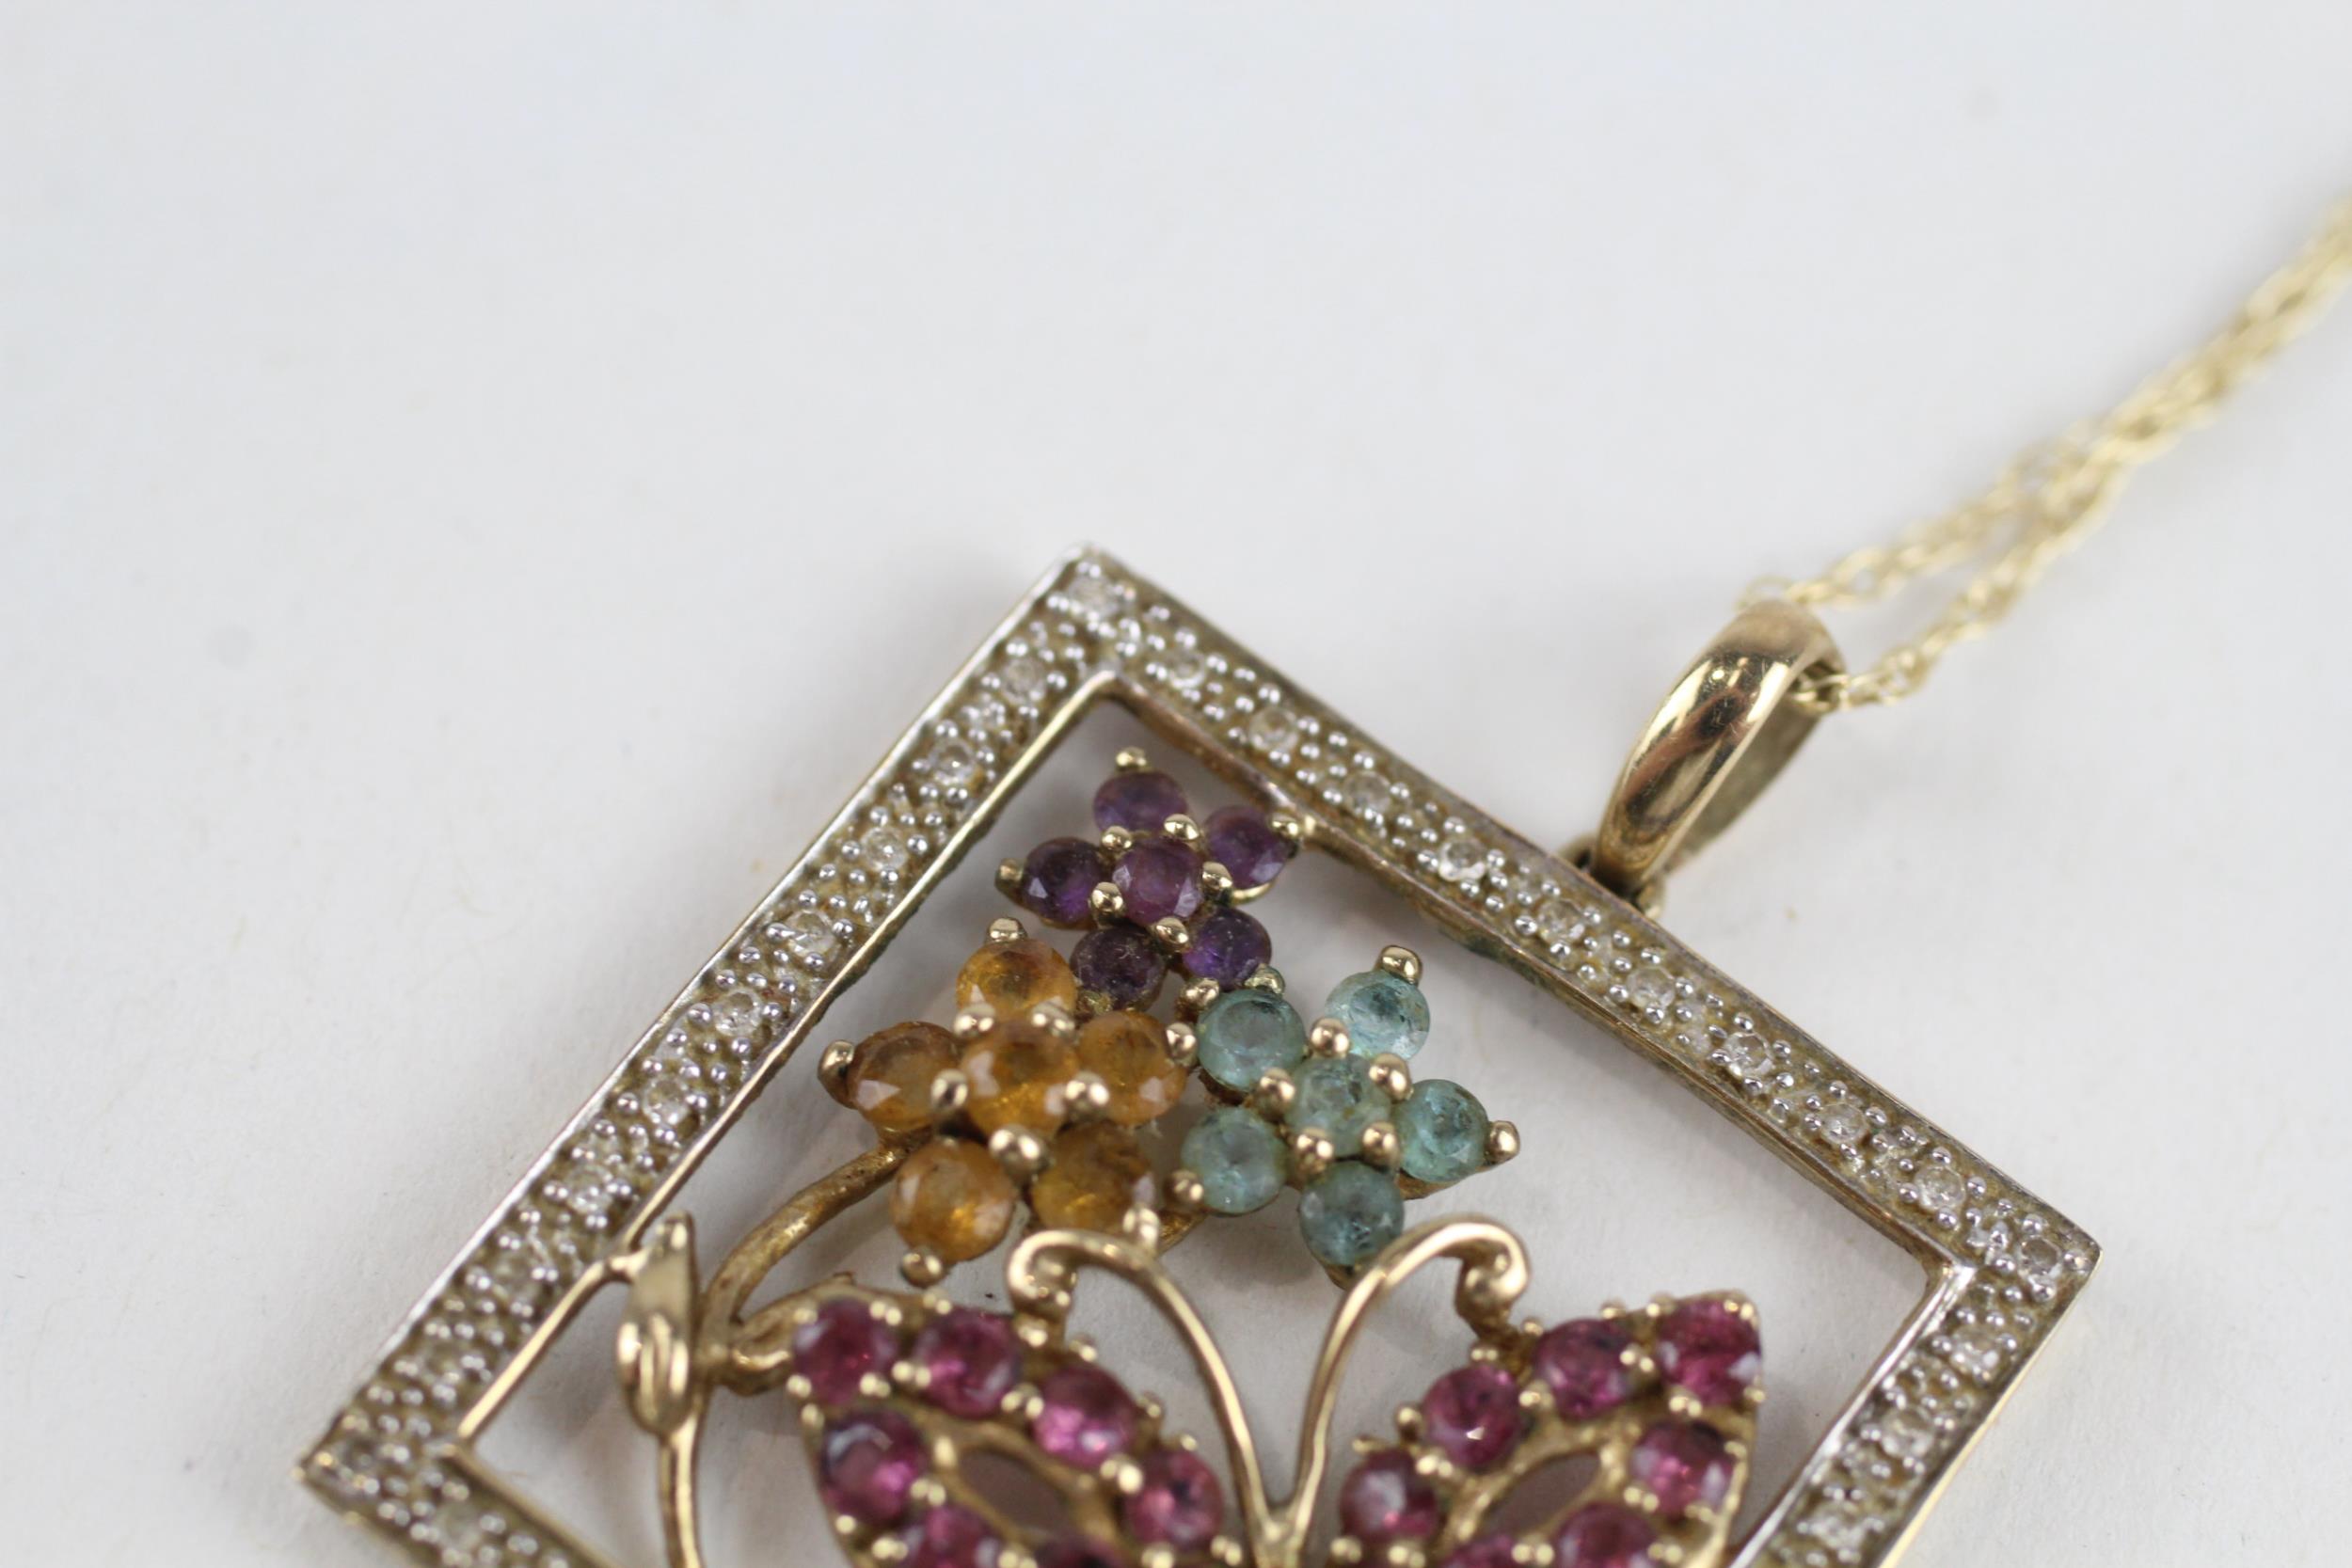 9ct gold multi gemstone floral pendant necklace, gemstones including: diamond, blue topaz, amethyst, - Image 2 of 4